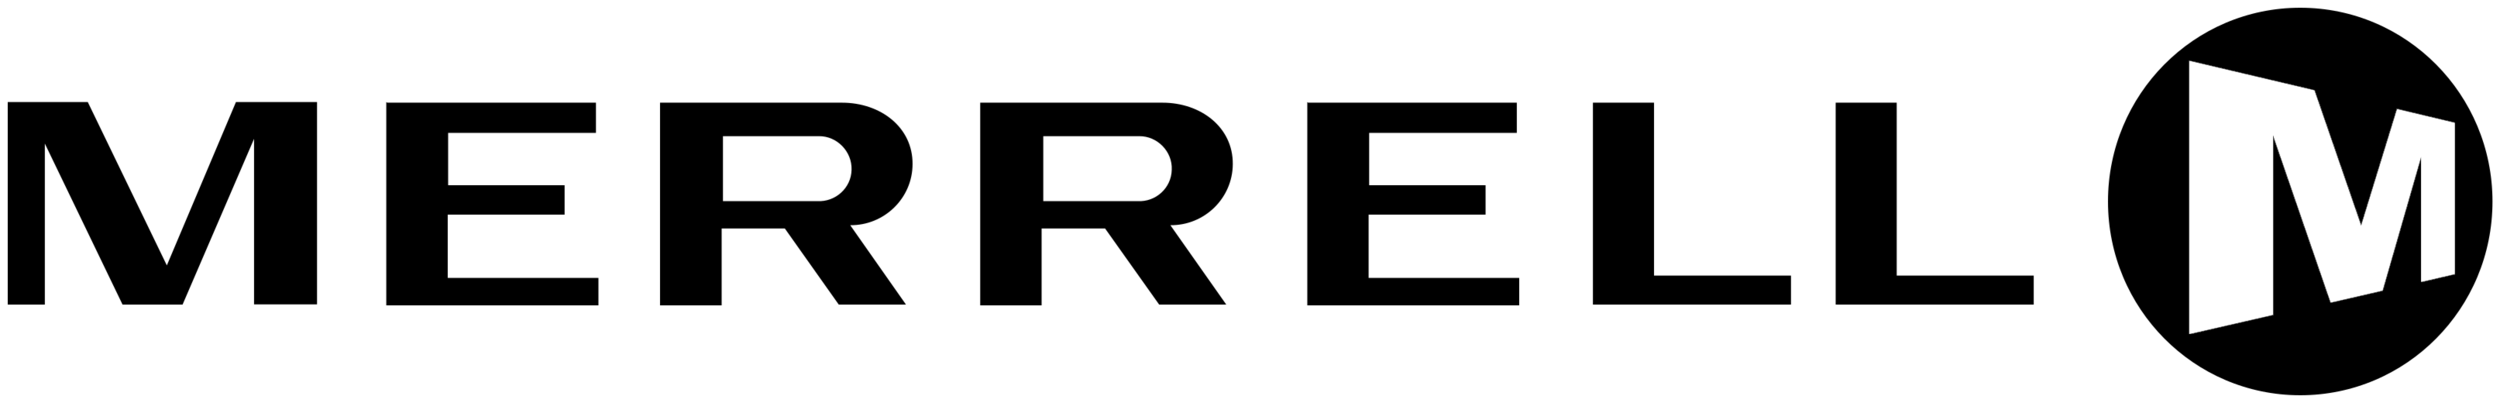 Merrell-Logo.png